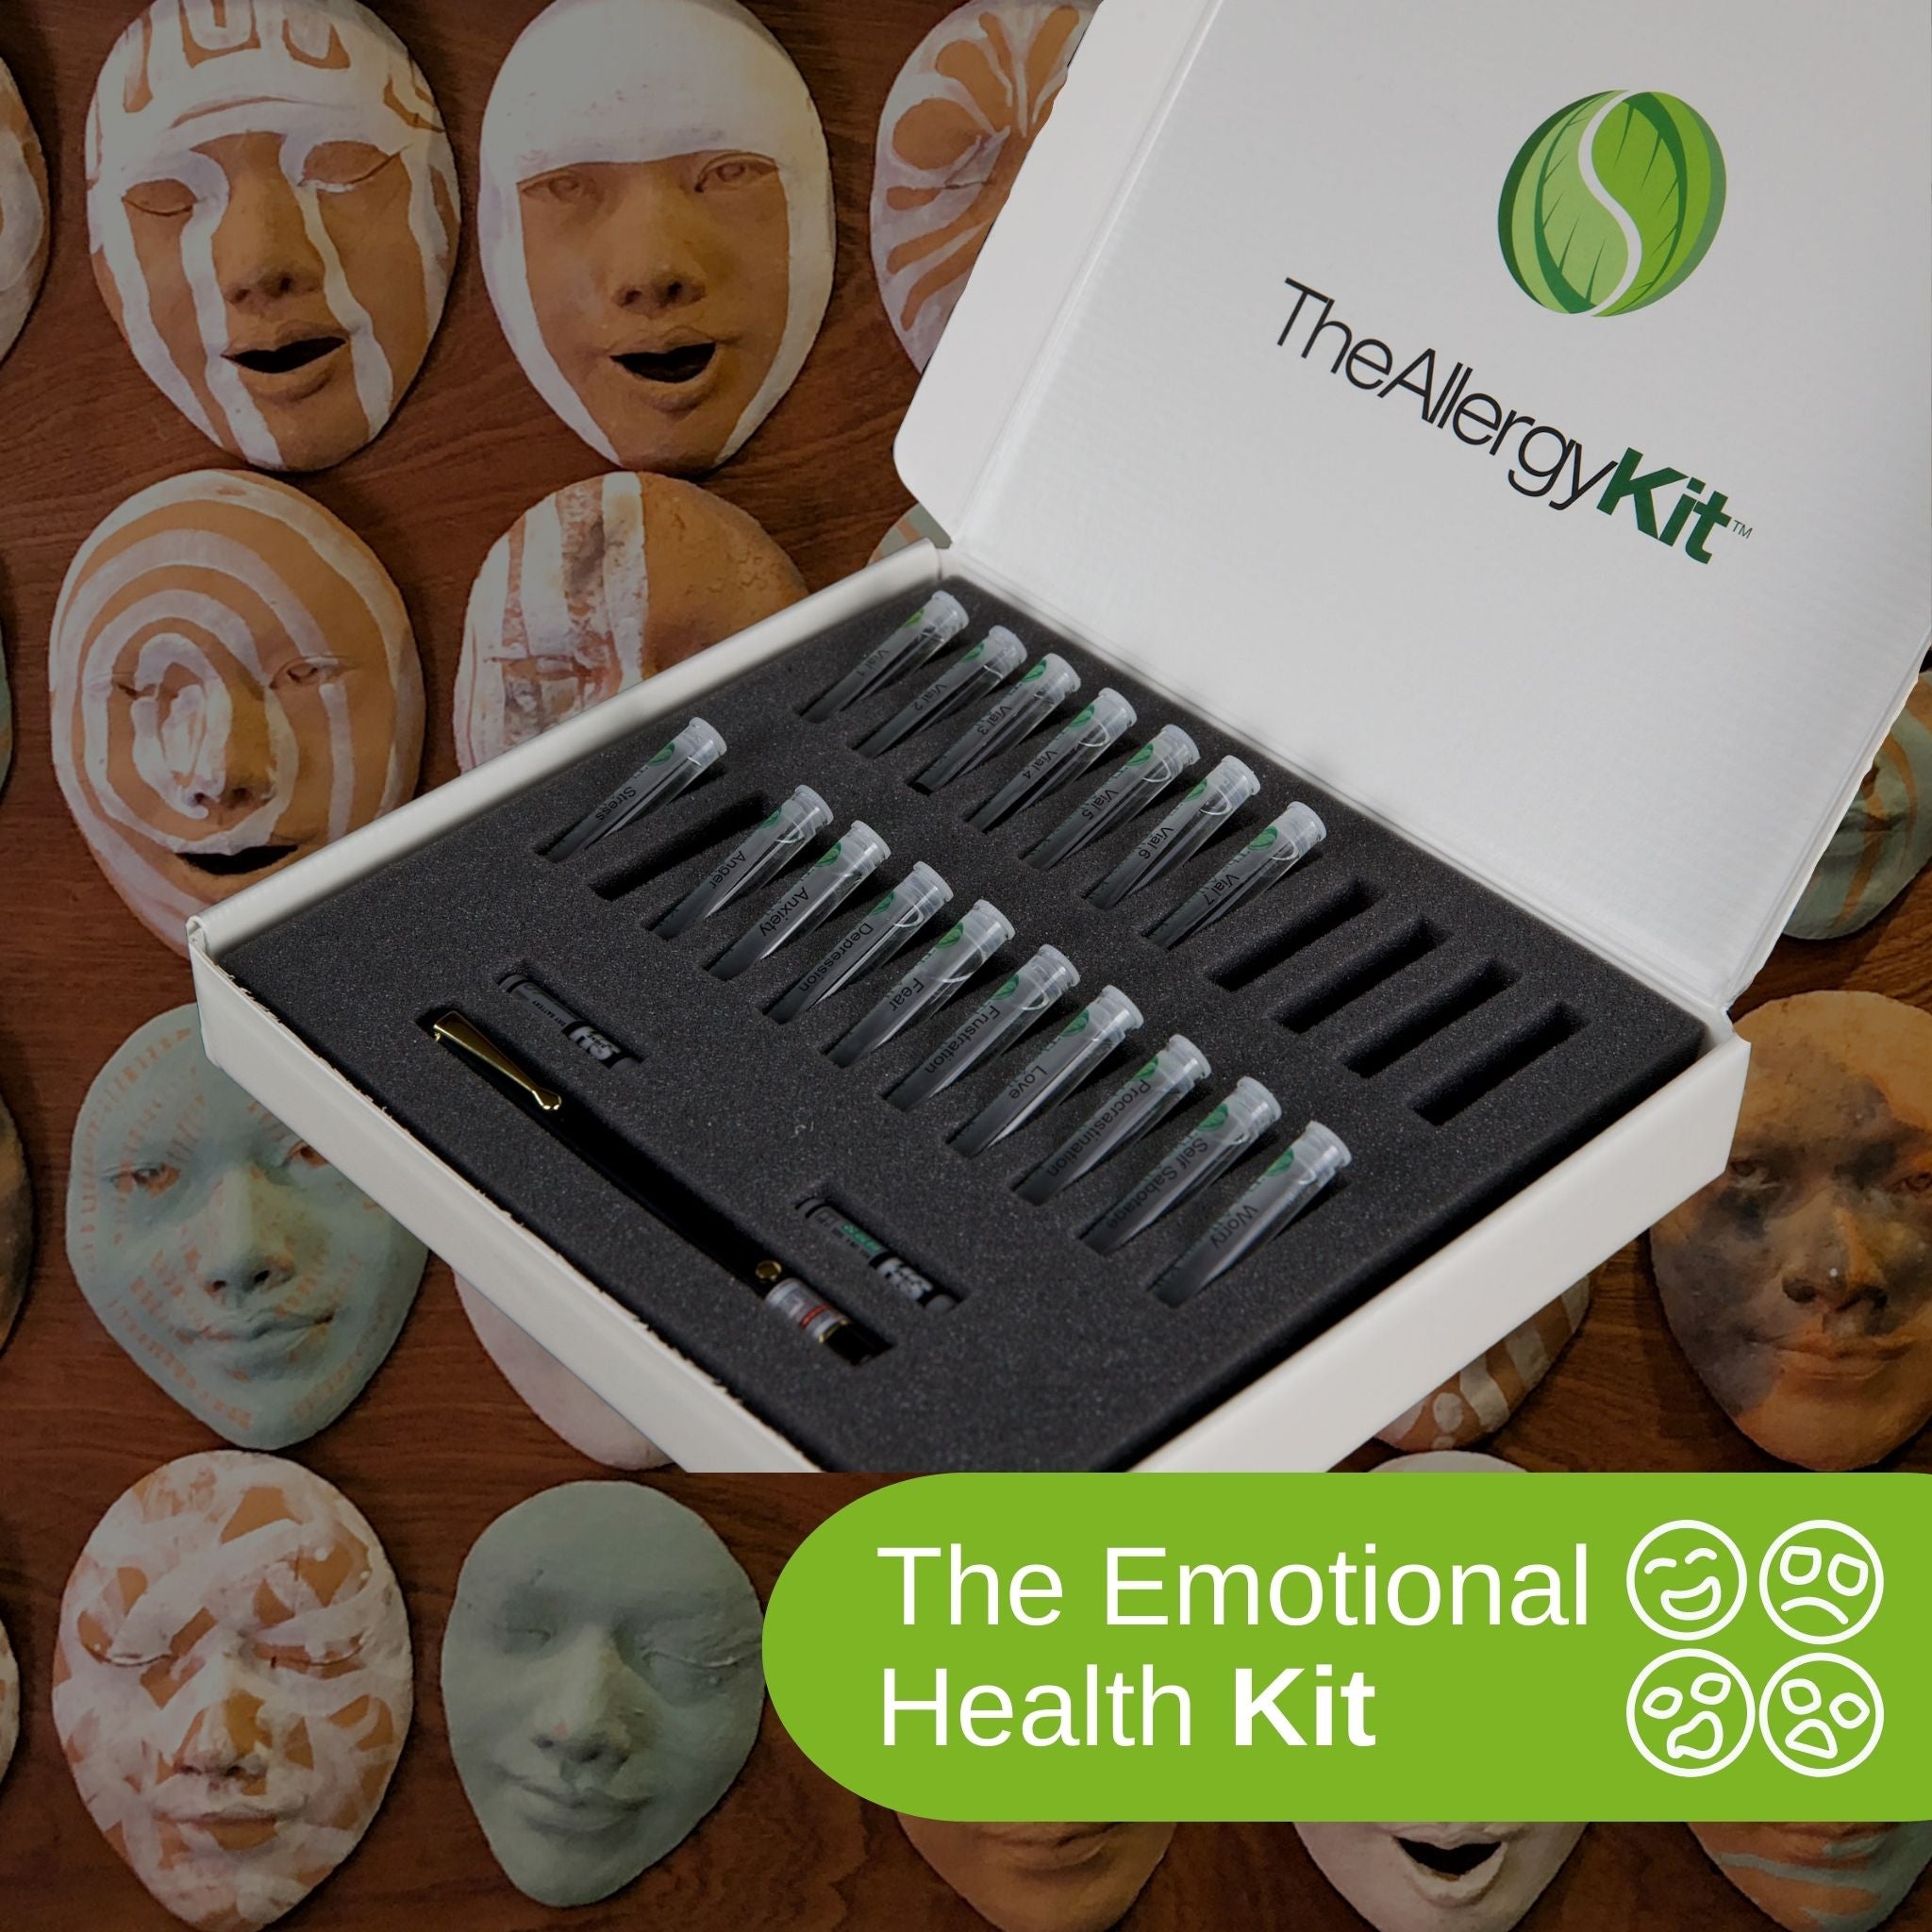 The Emotional Health Kit